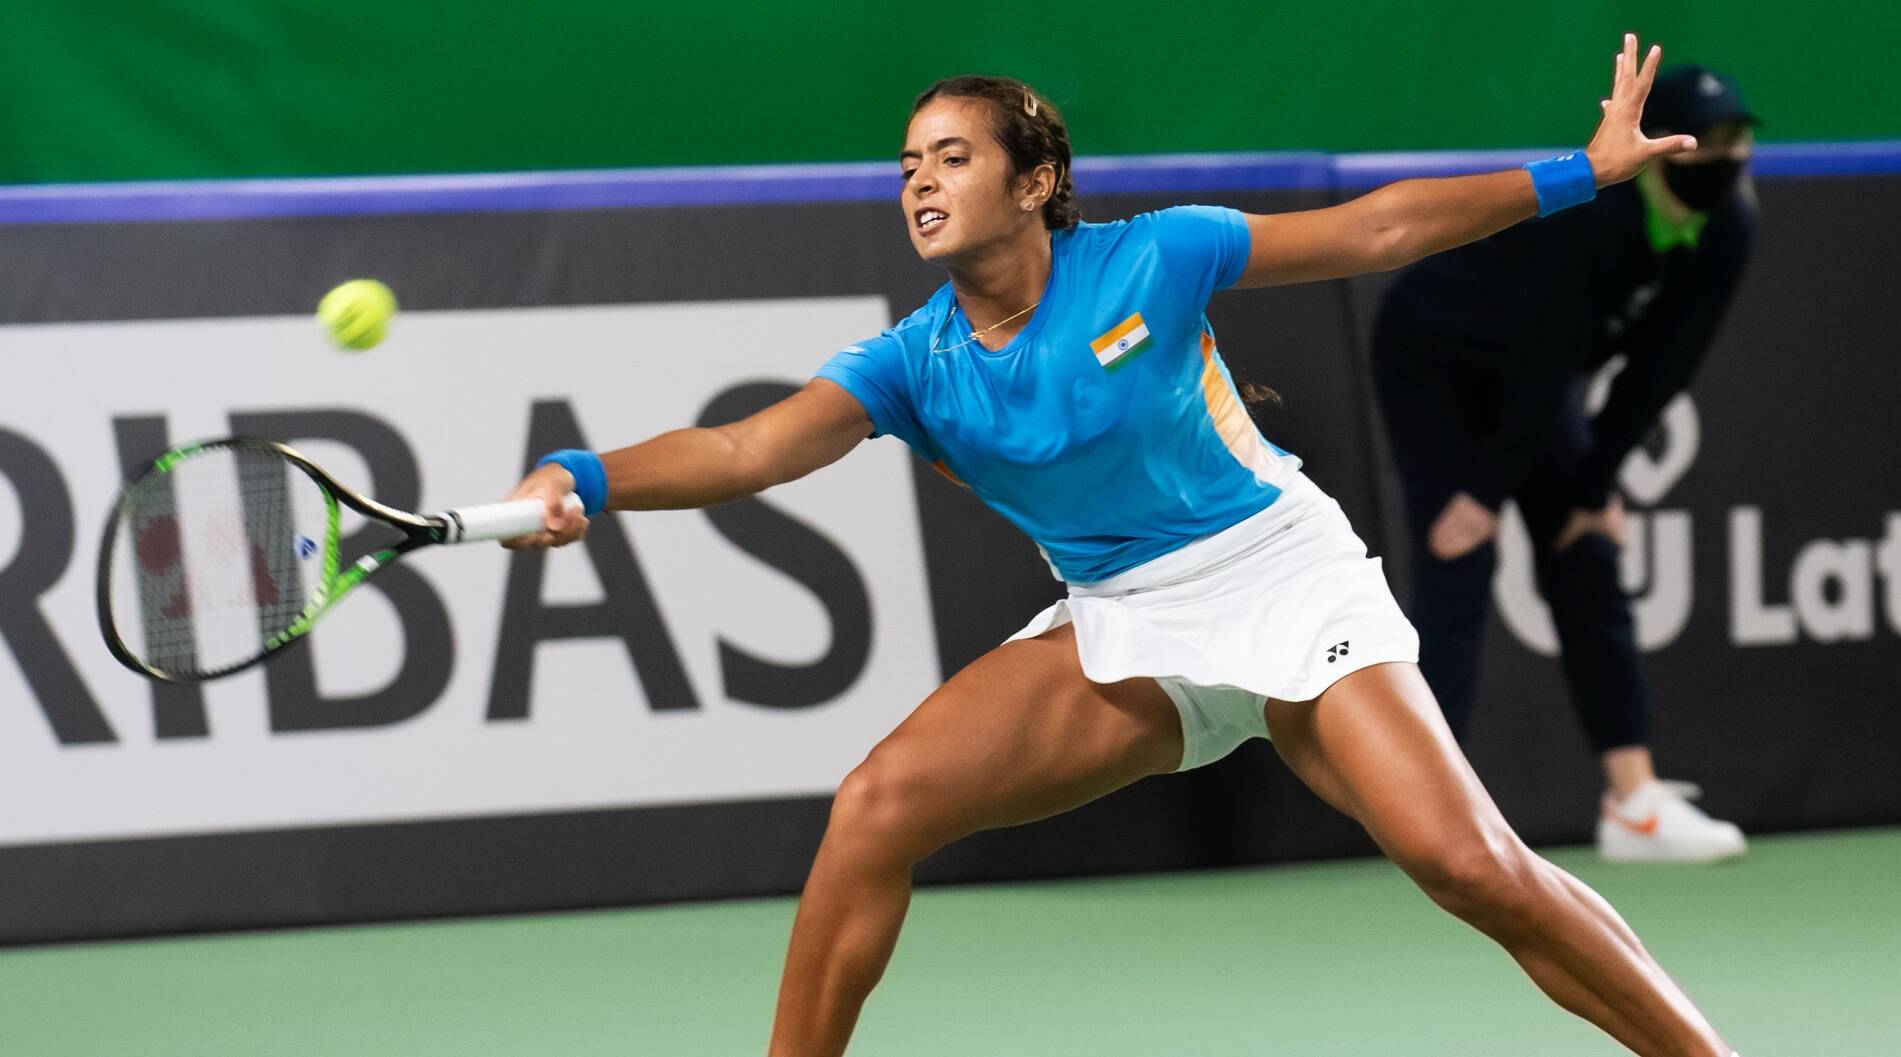 WTA Chenai Open 2022 | Ankita Raina given a wild card entry into women's singles draw